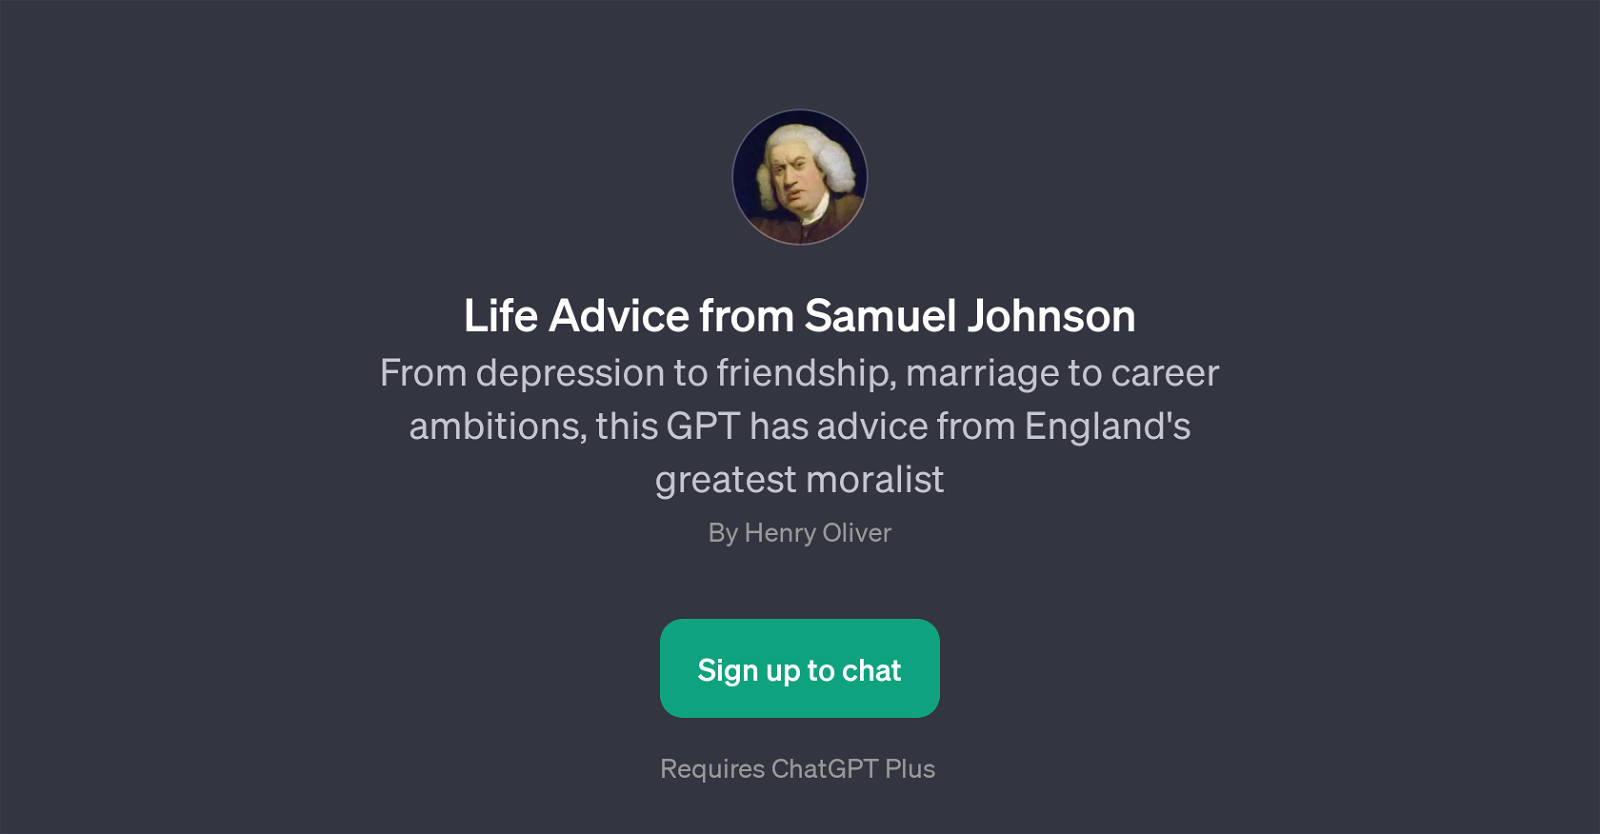 Life Advice from Samuel Johnson website